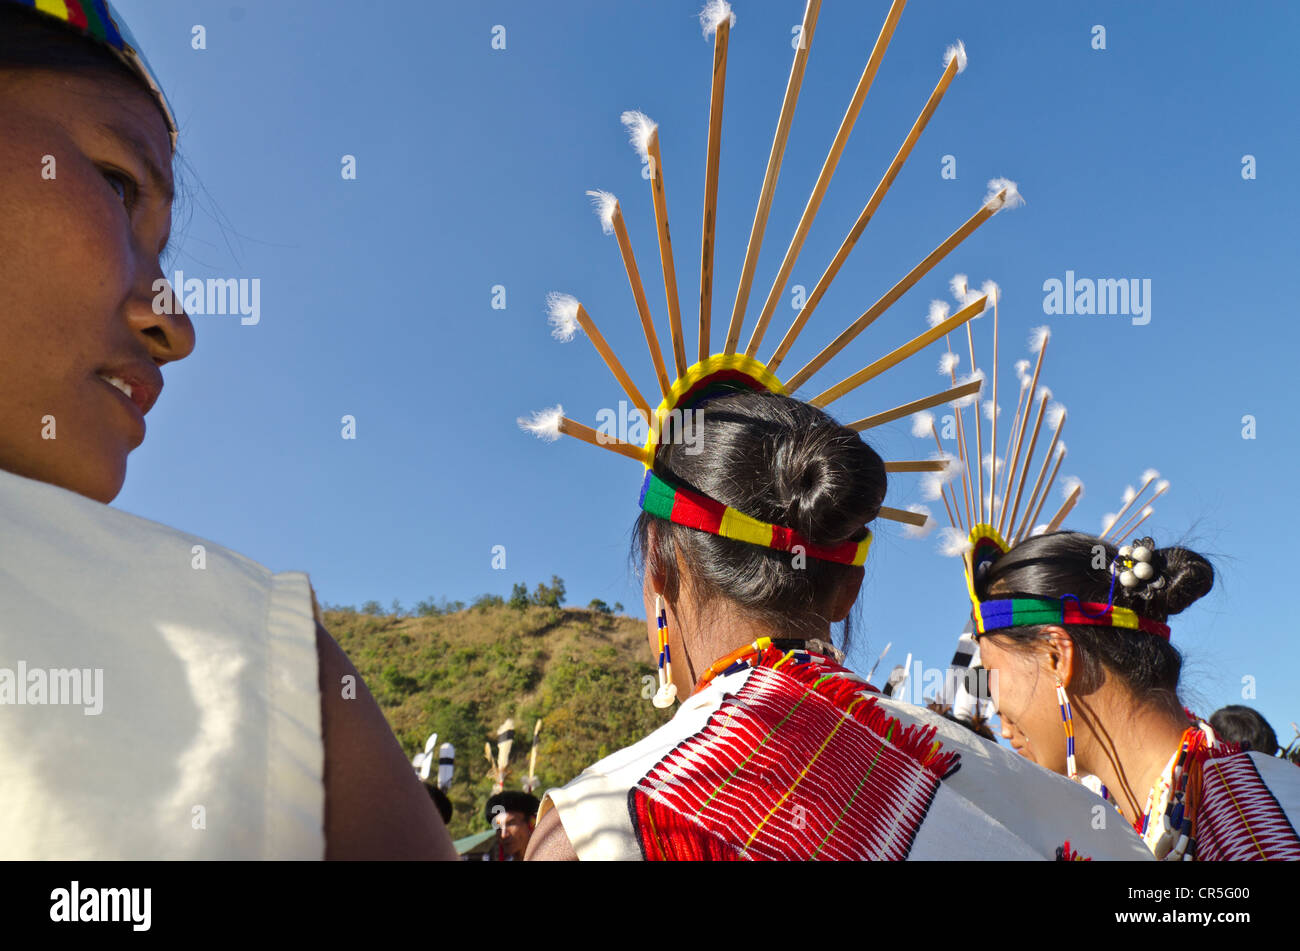 People of the Hipa tribe with traditional dress, Kohima, Nagaland, India, Asia Stock Photo